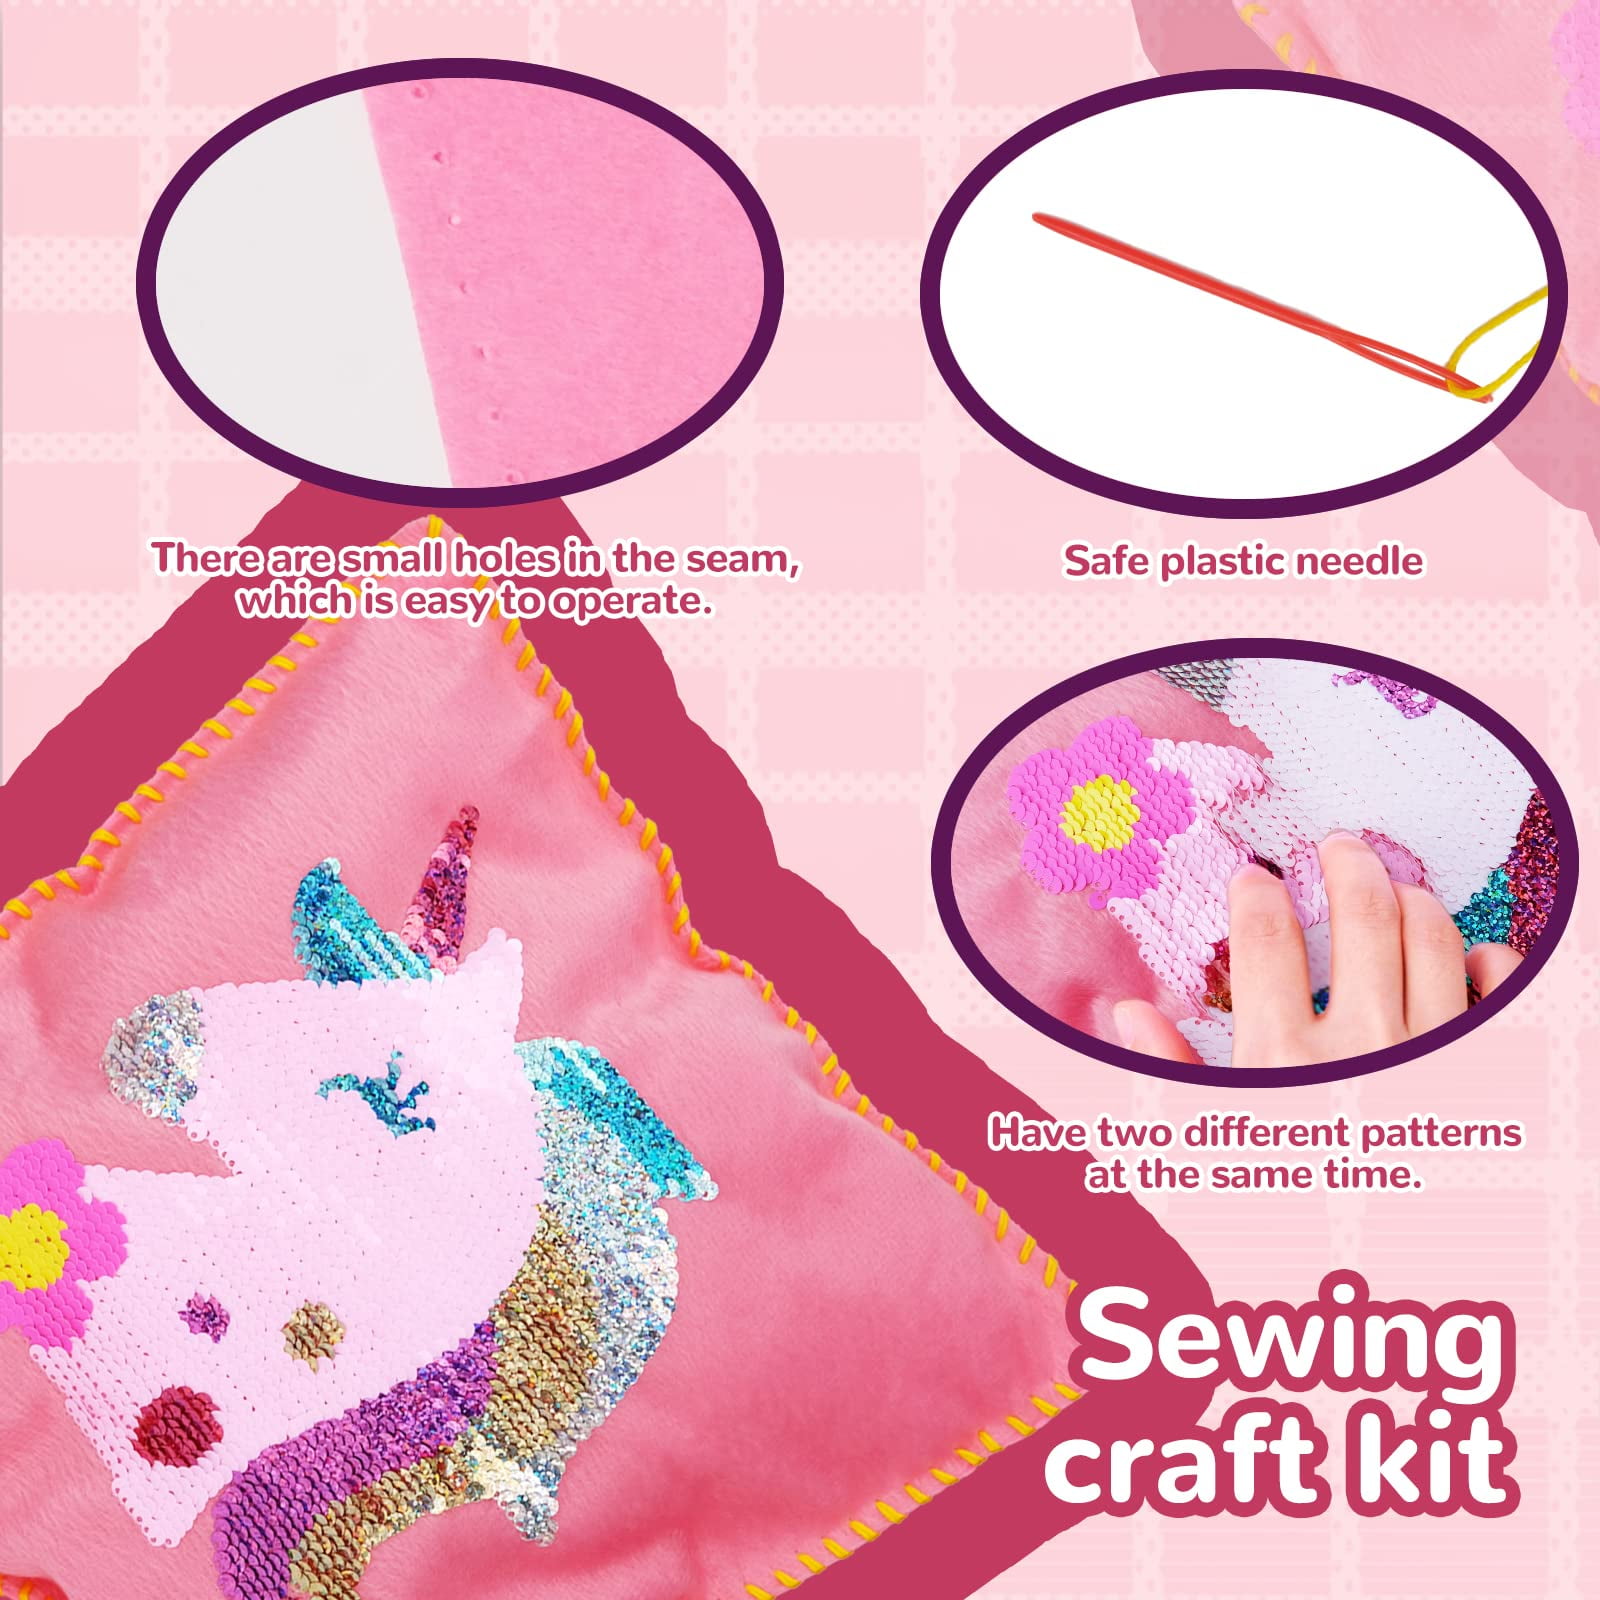 FNNMNNR 4 Pcs Craft Kits for Sewing Sets, Preschool Educational